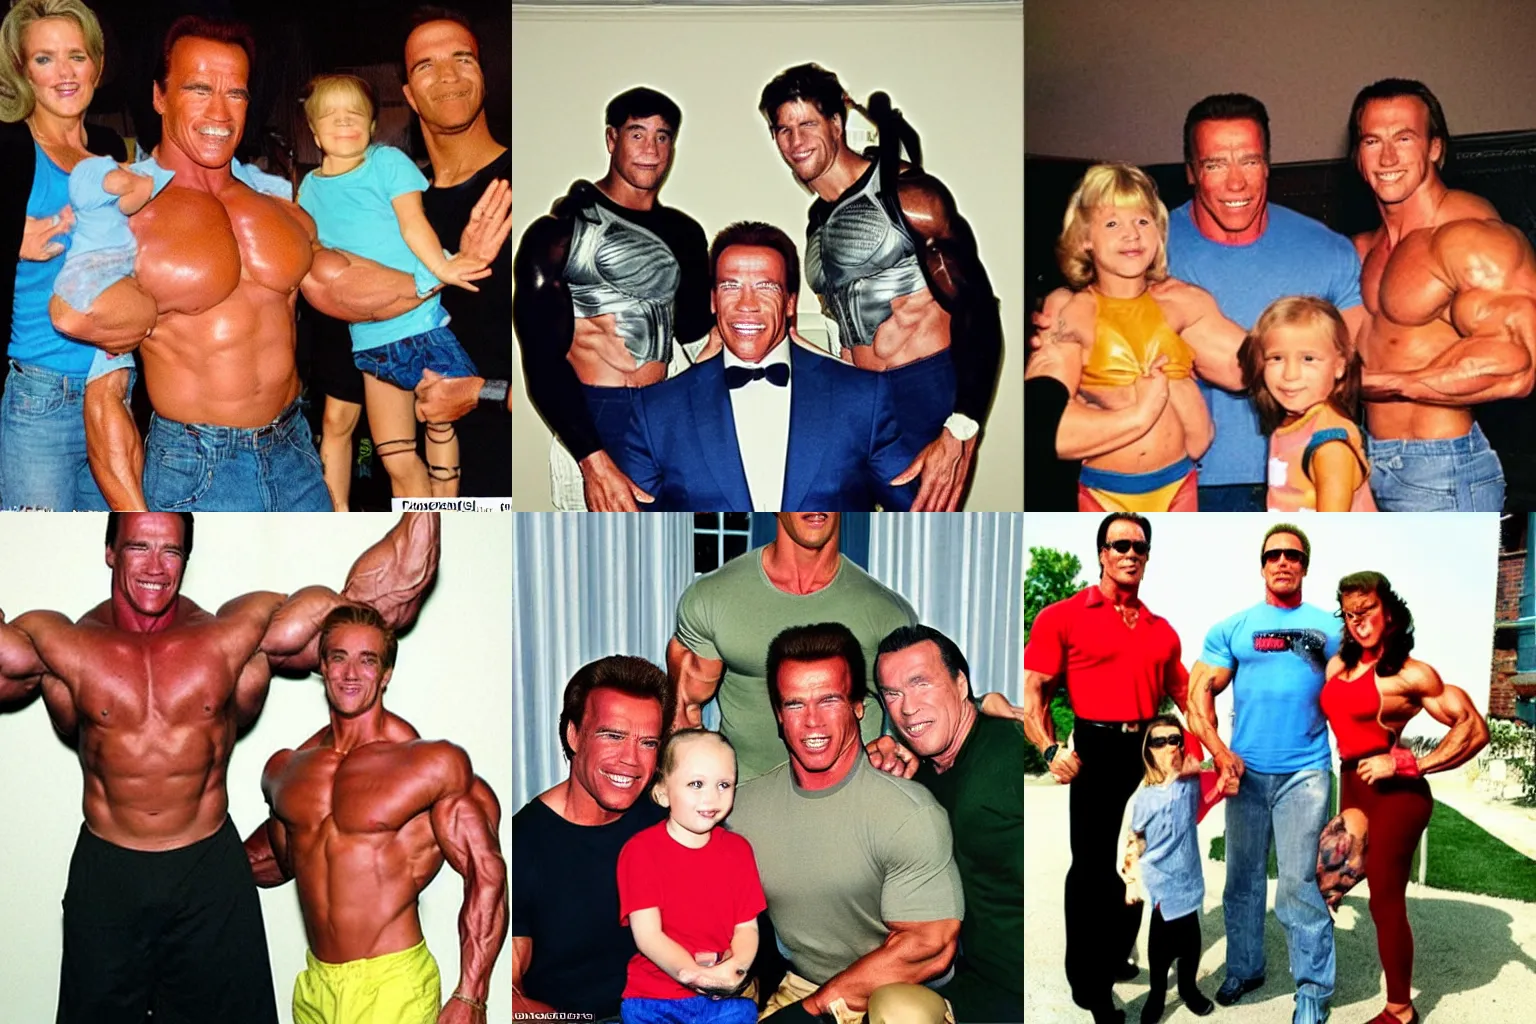 Prompt: color family photo of 3 Arnold Schwarzenegger impersonators